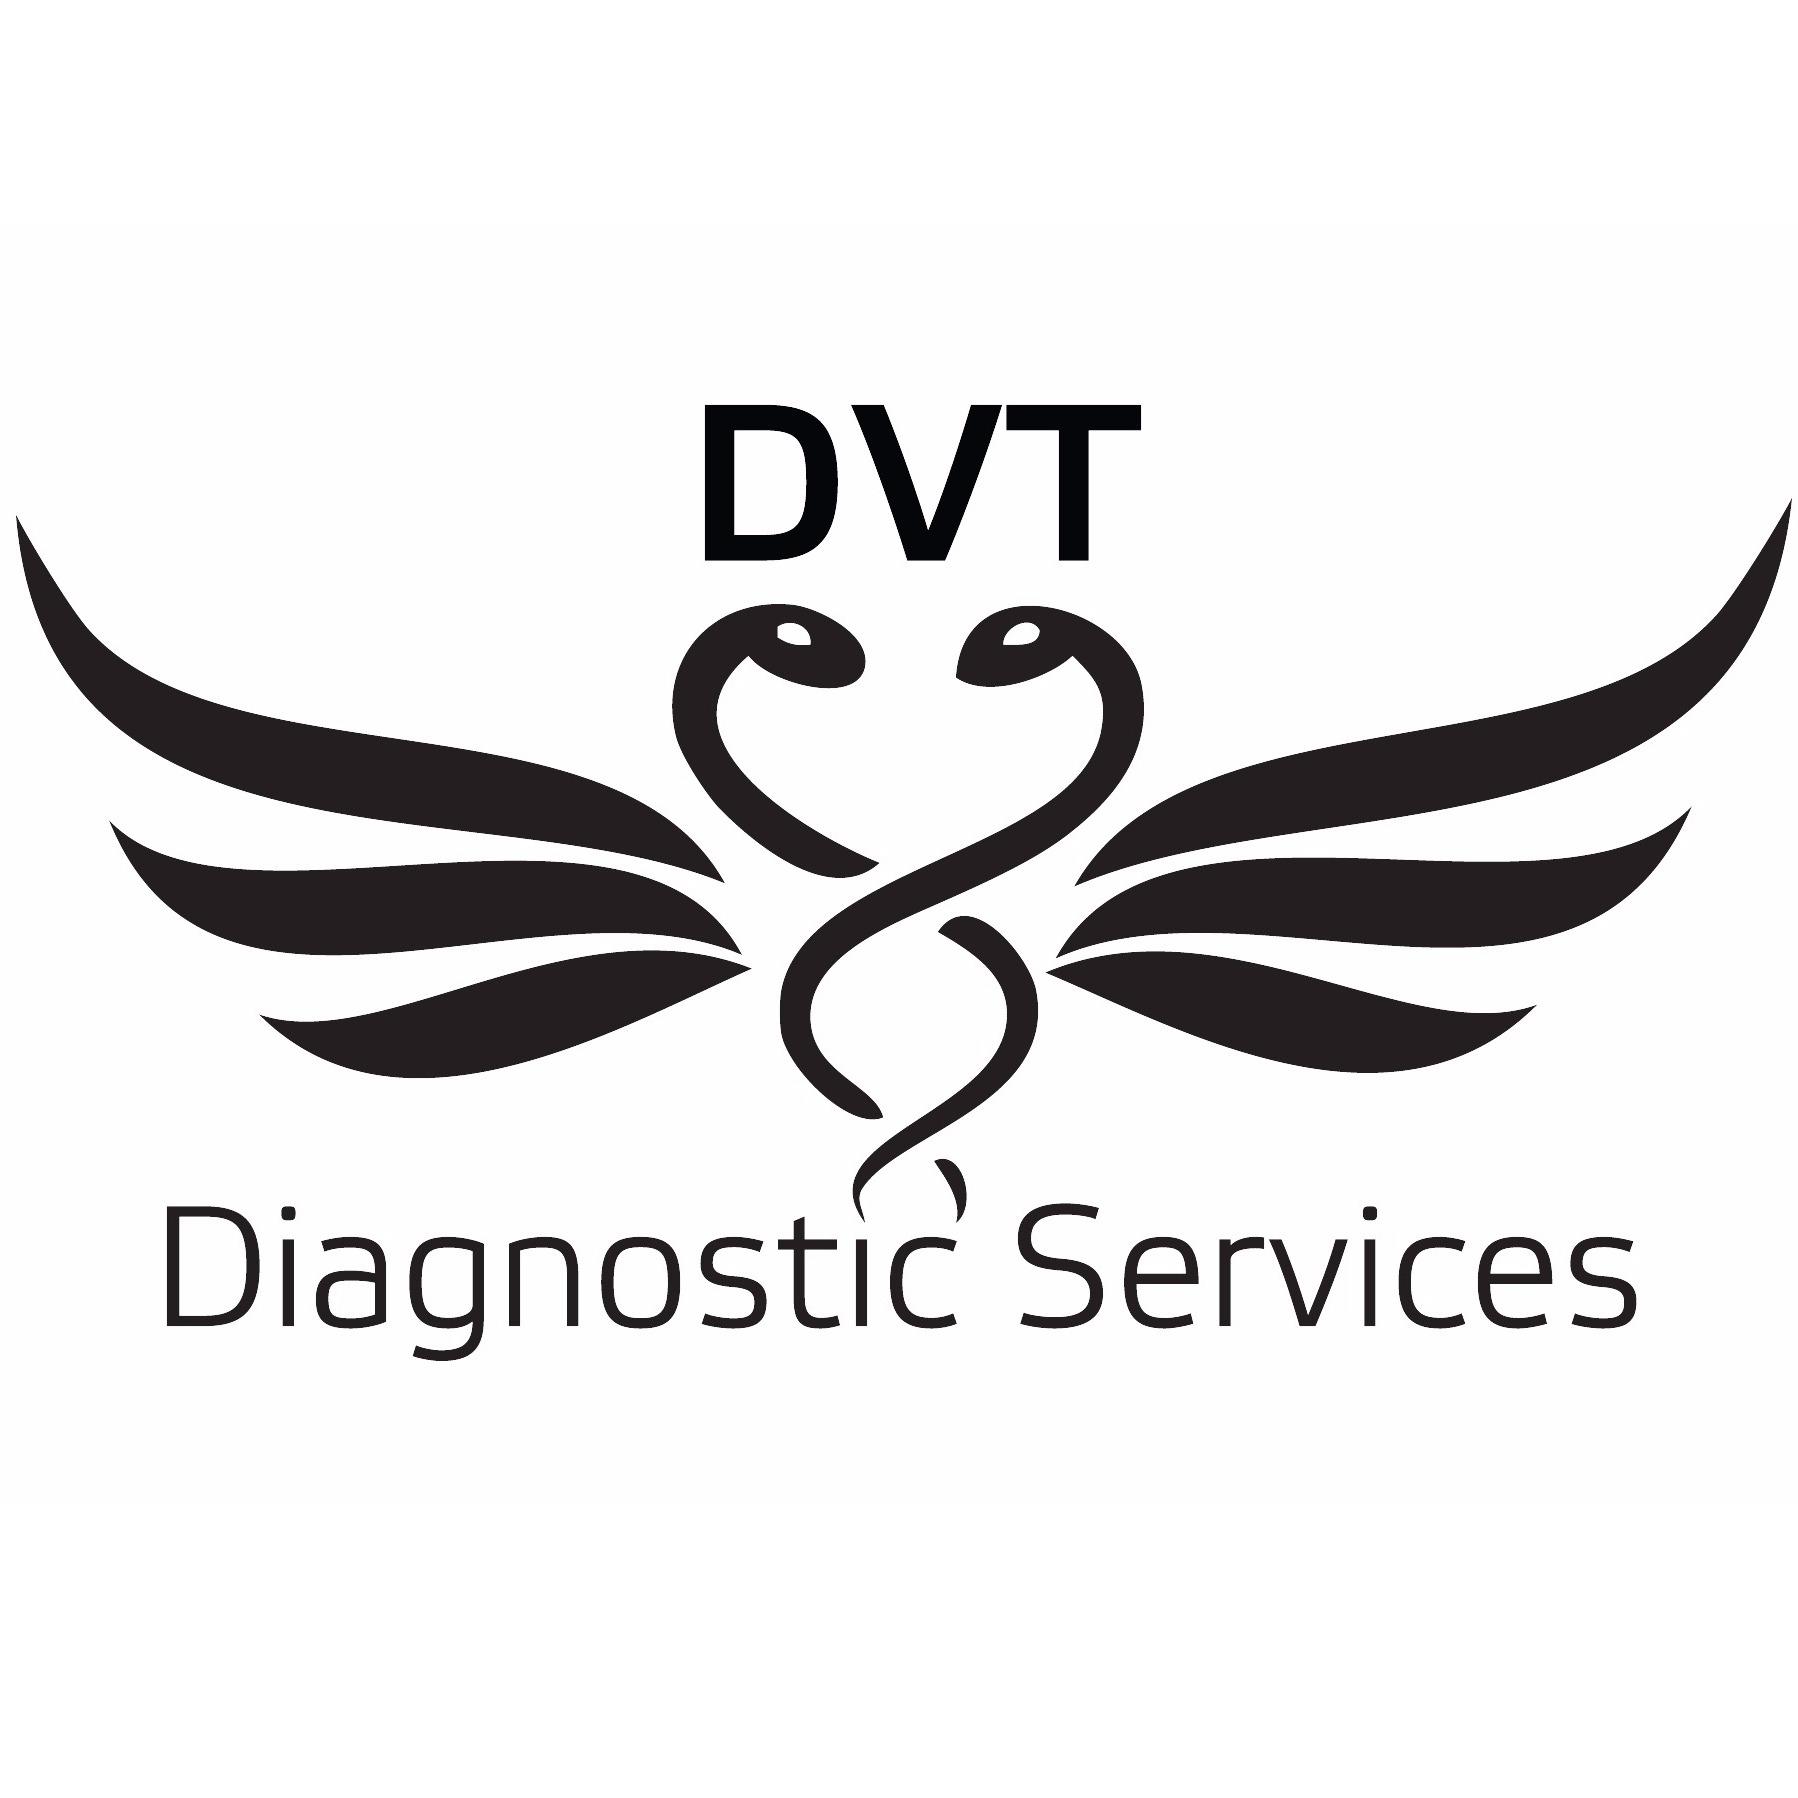 DVT Diagnostic Services, Inc. - Porter Ranch, CA 91326 - (818)534-8288 | ShowMeLocal.com